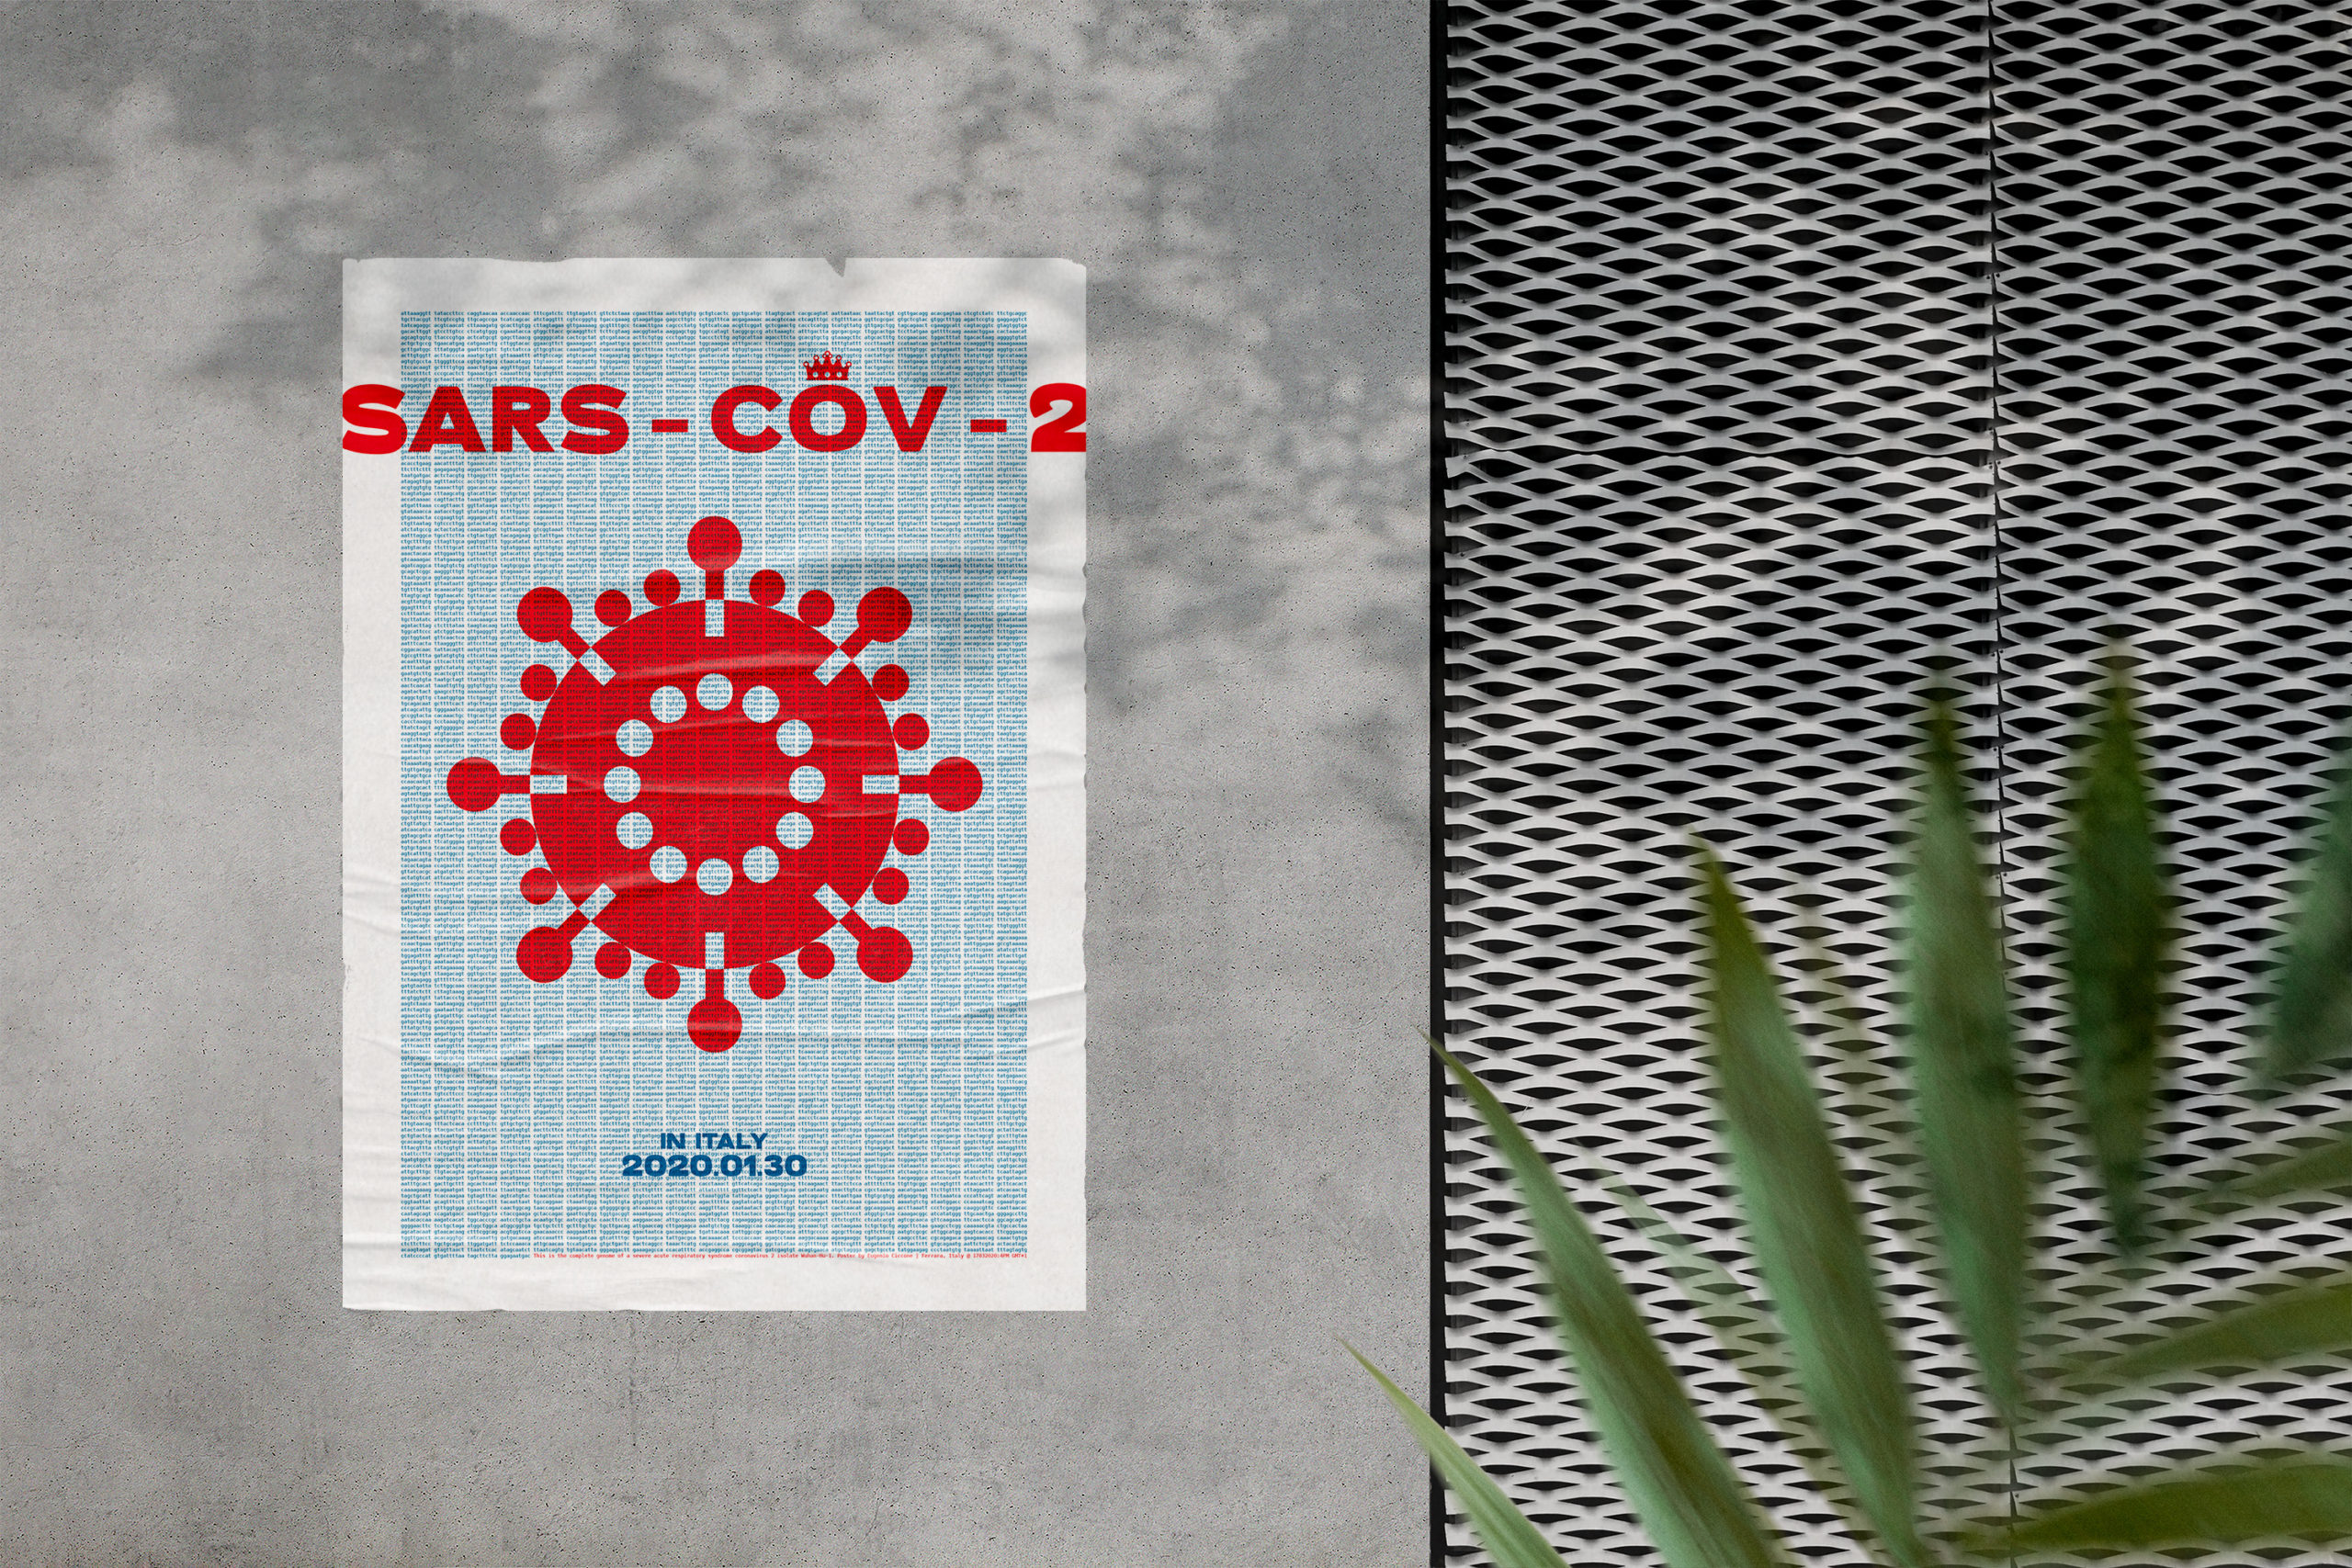 Featured image for “Poster Coronavirus Sars-Cov2”